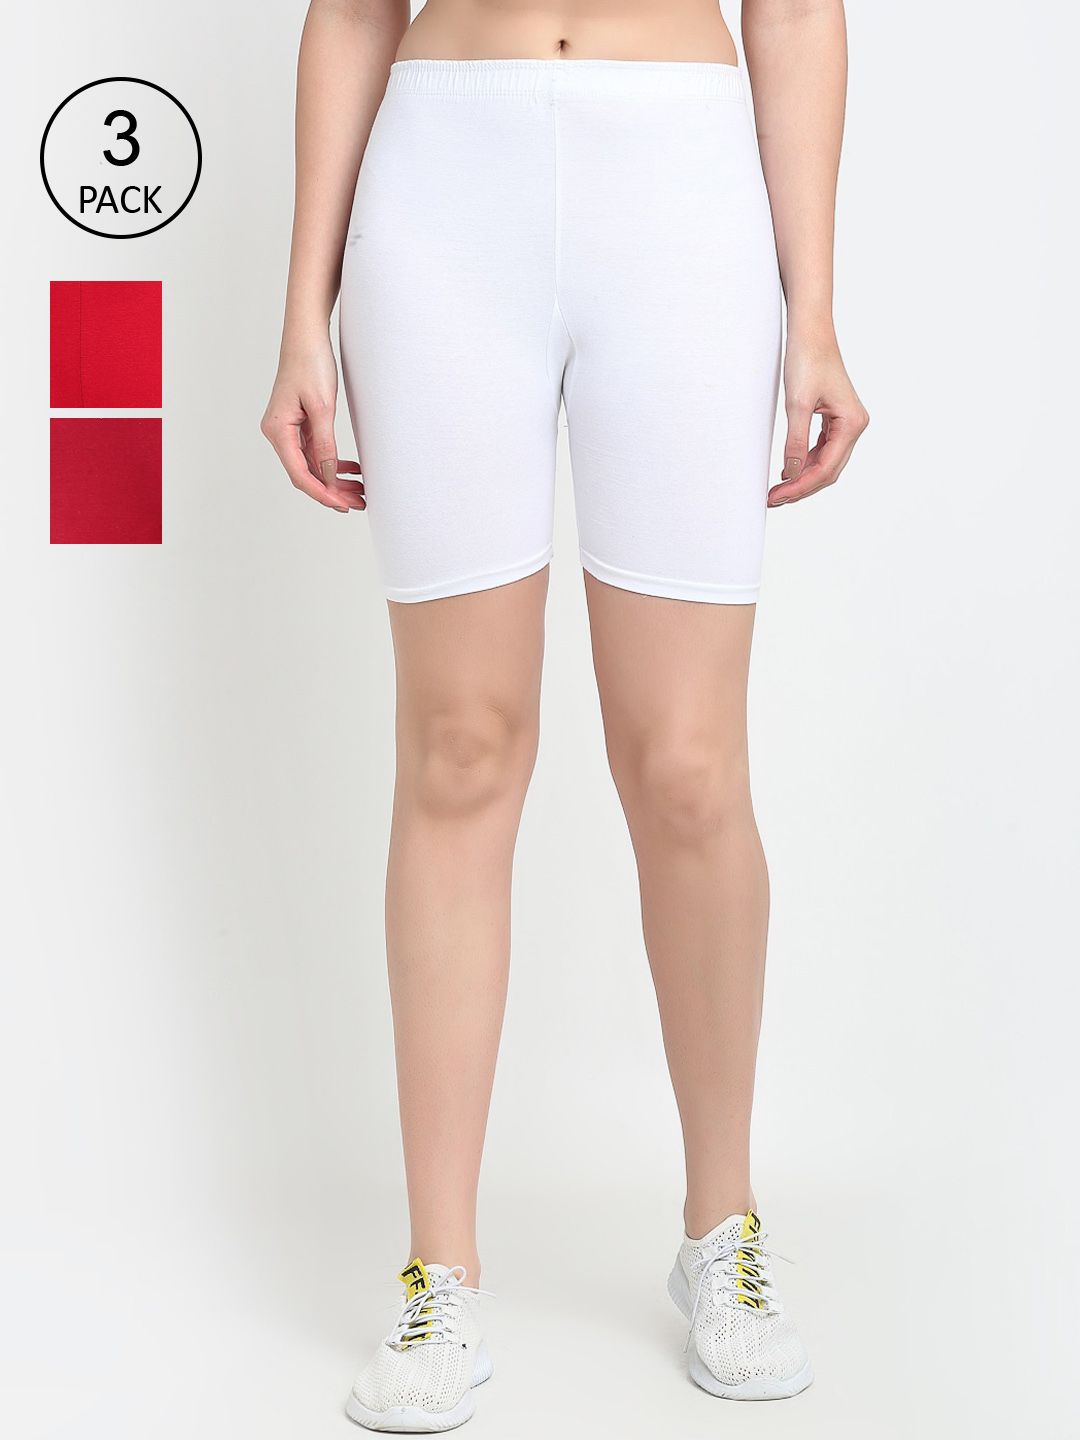 GRACIT Women Pack Of 3 Skinny Fit Biker Shorts Price in India